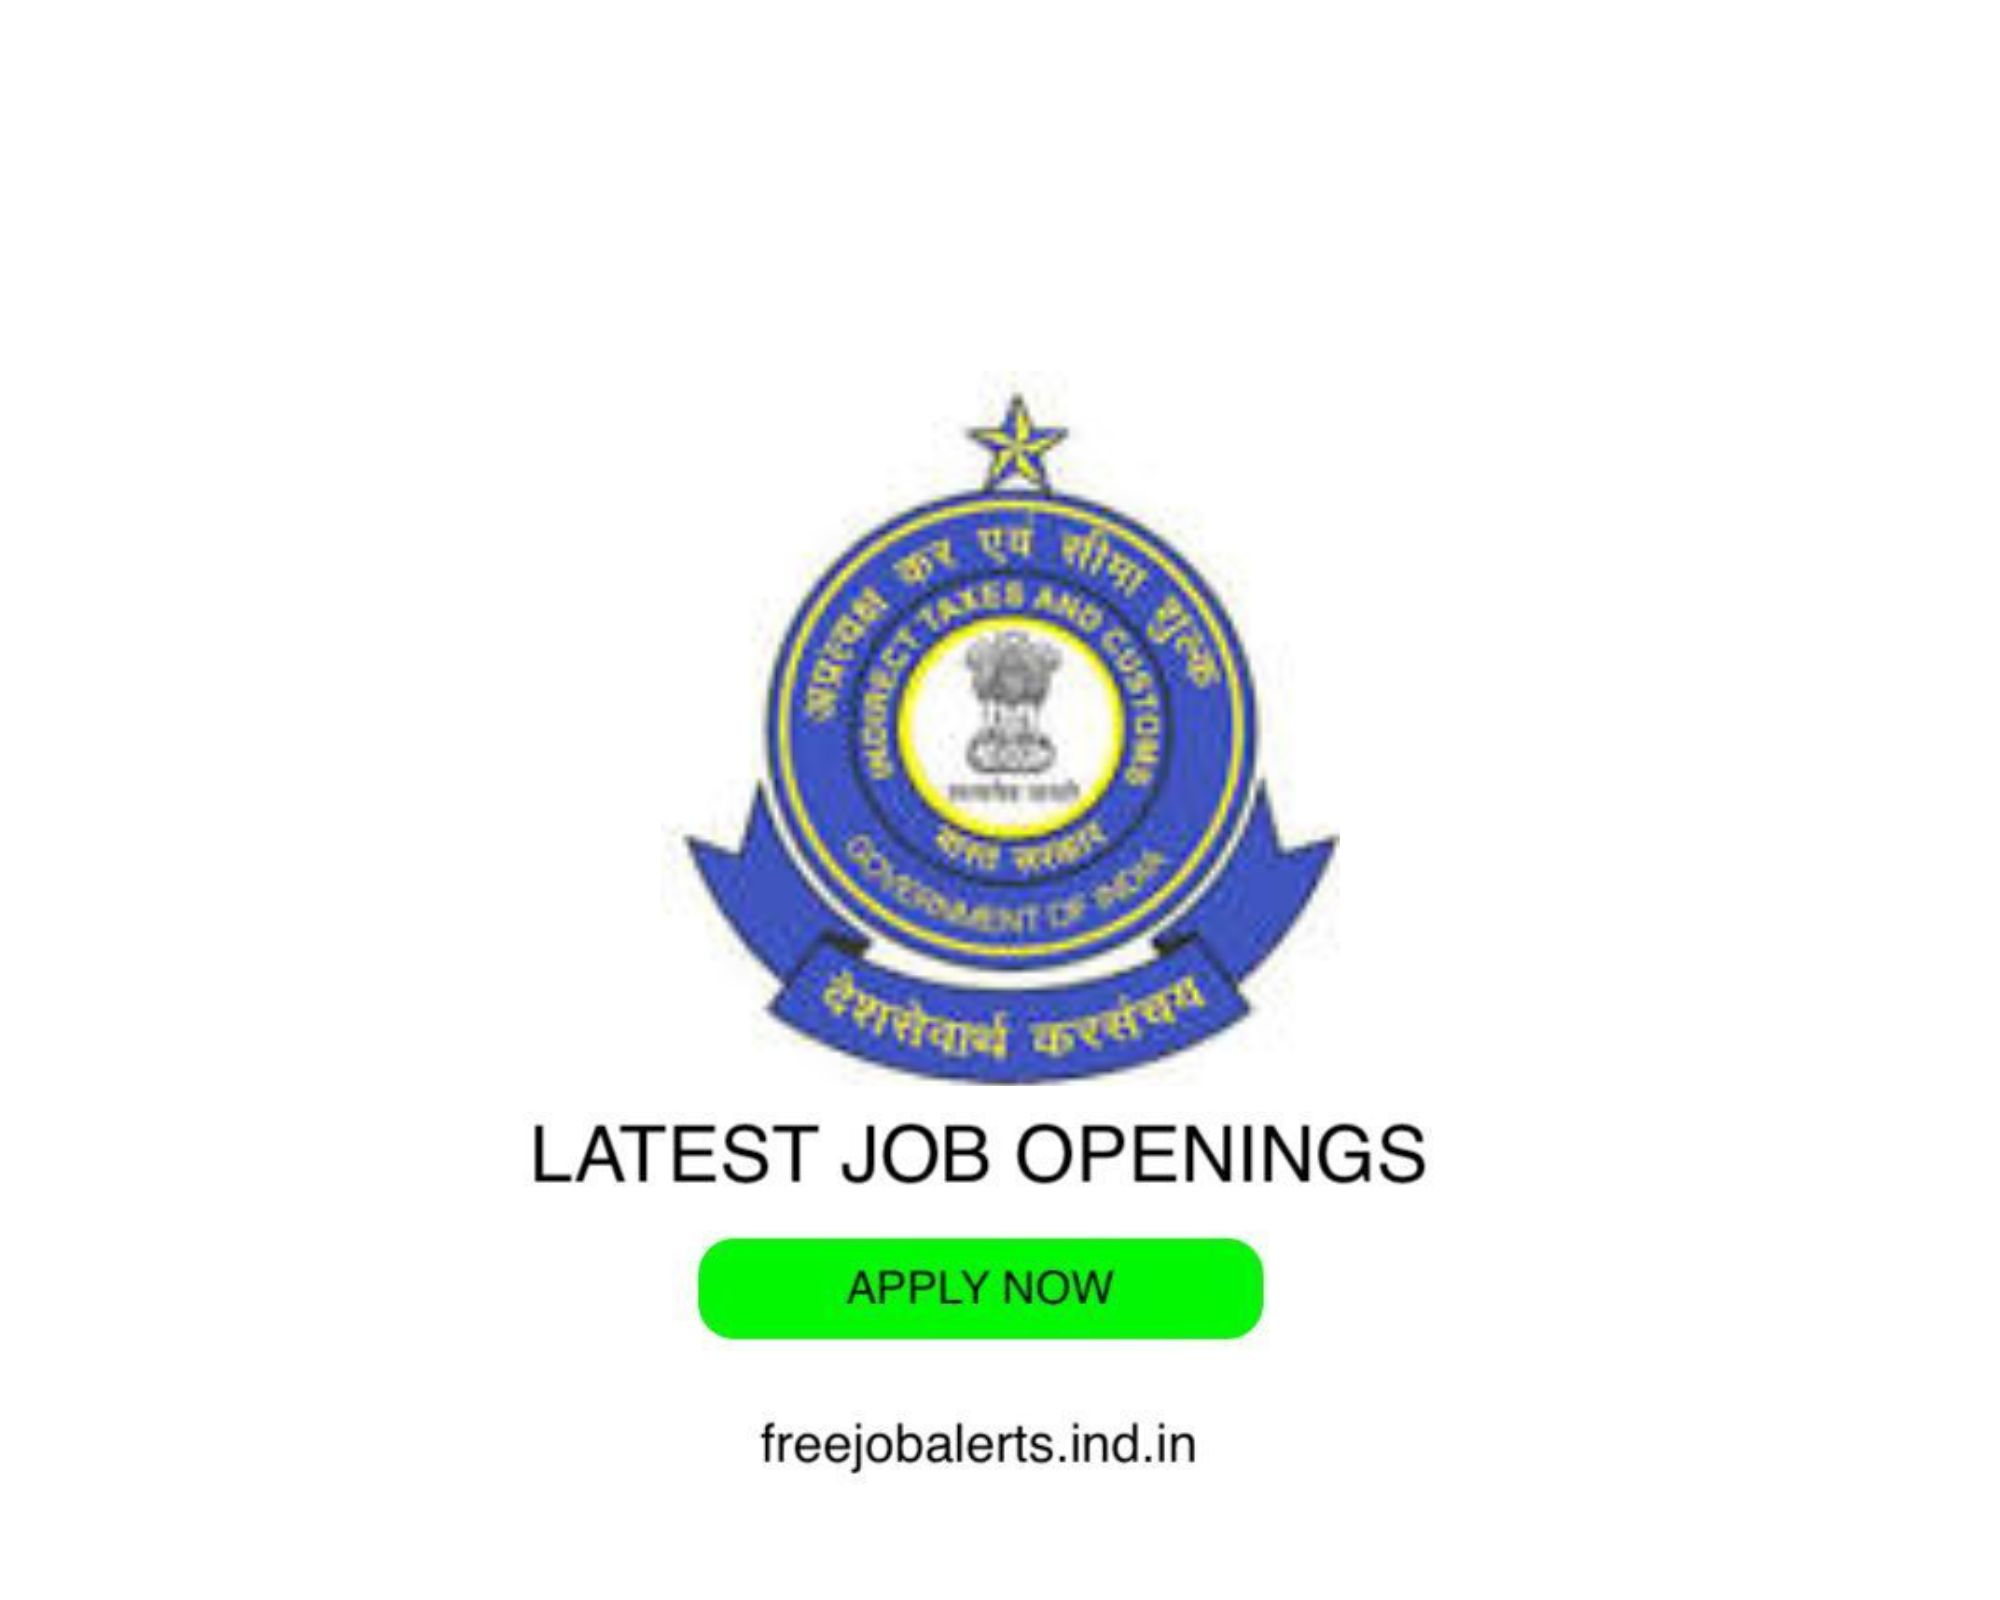 CBIC - Customs Marine Wing in Customs - Latest Govt job openings - Free job alerts, Indian Govt Jobs